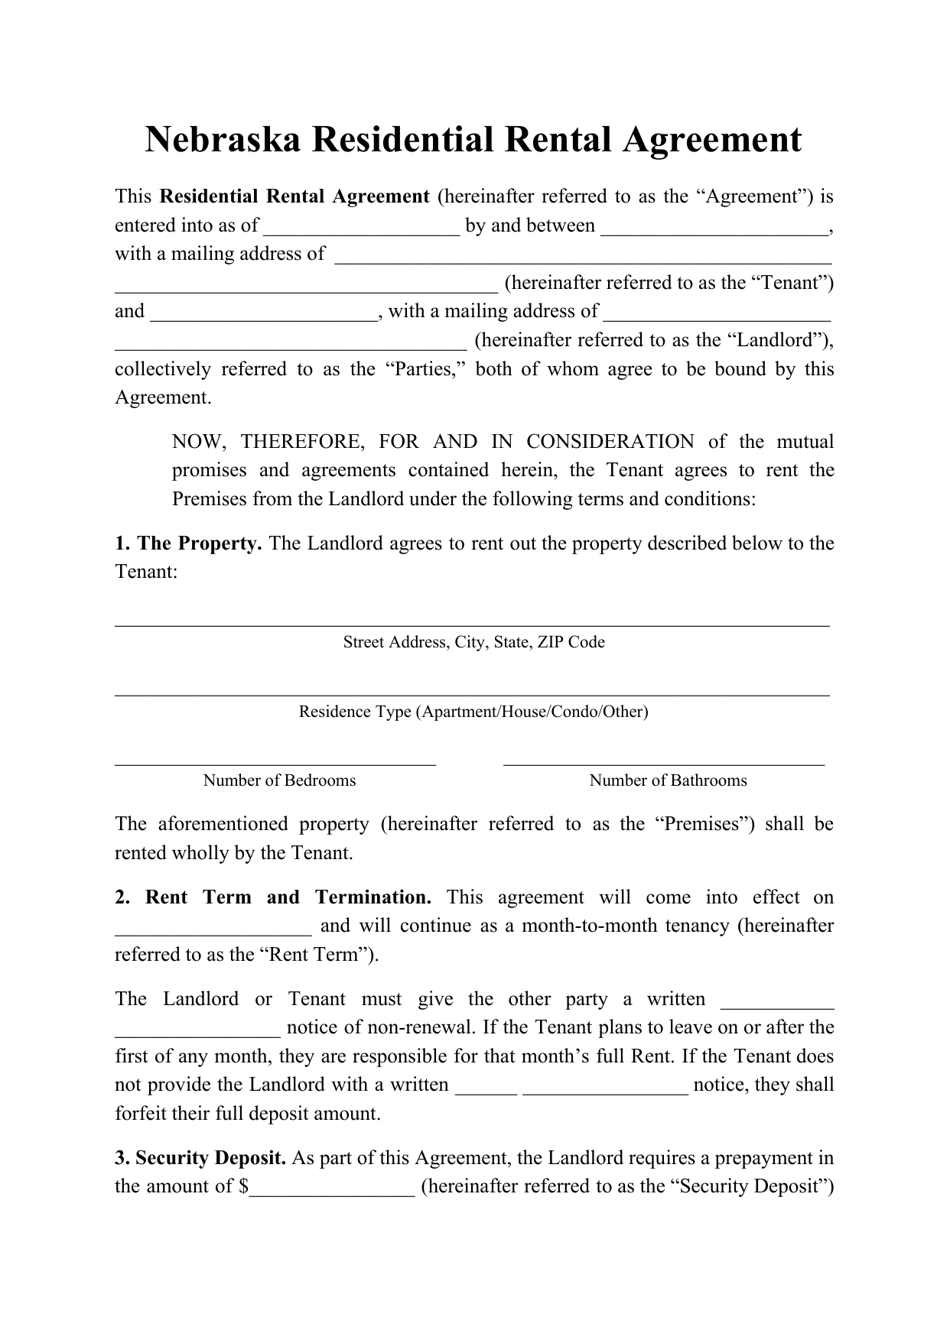 Residential Rental Agreement Template - Nebraska, Page 1